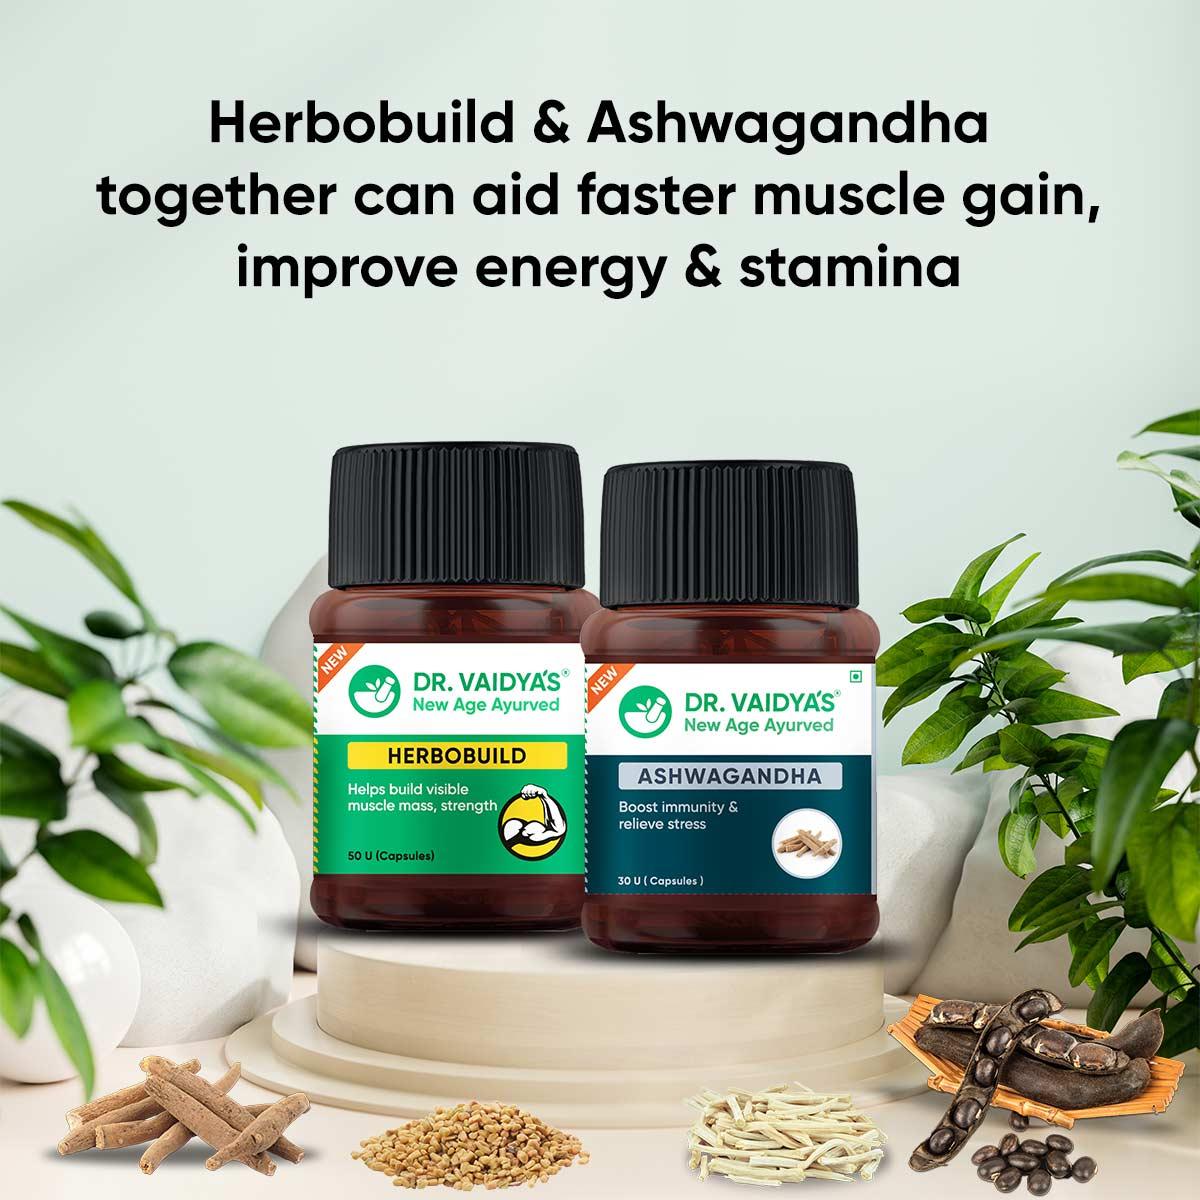 Herbobuild & Ashwagandha Combo: For Fast Muscle Growth, Stamina & Fitness - Herbobuild